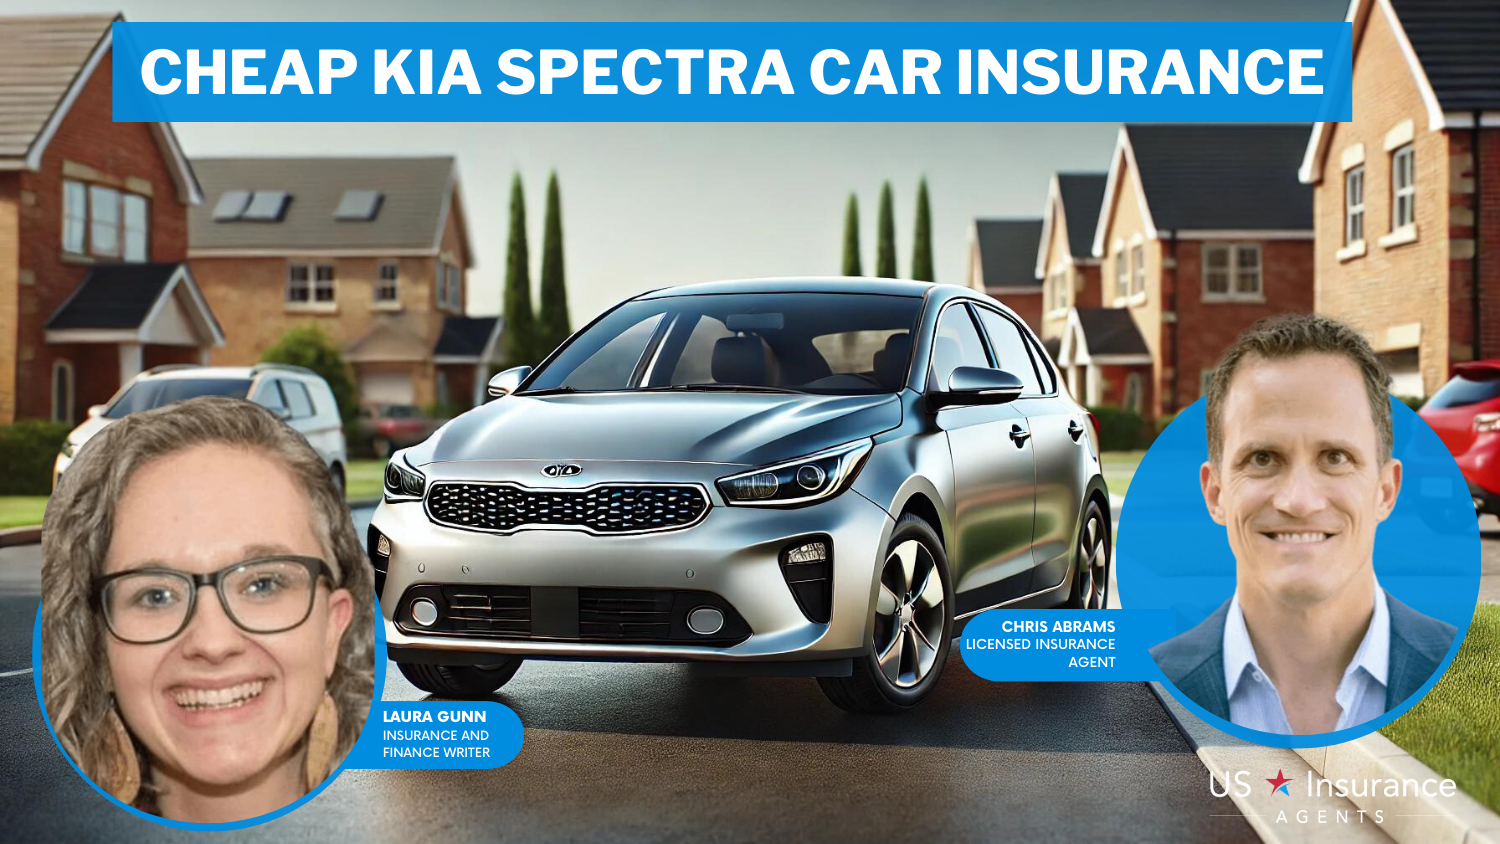 Cheap Kia Spectra Car Insurance: Liberty Mutual, Travelers, and Farmers.